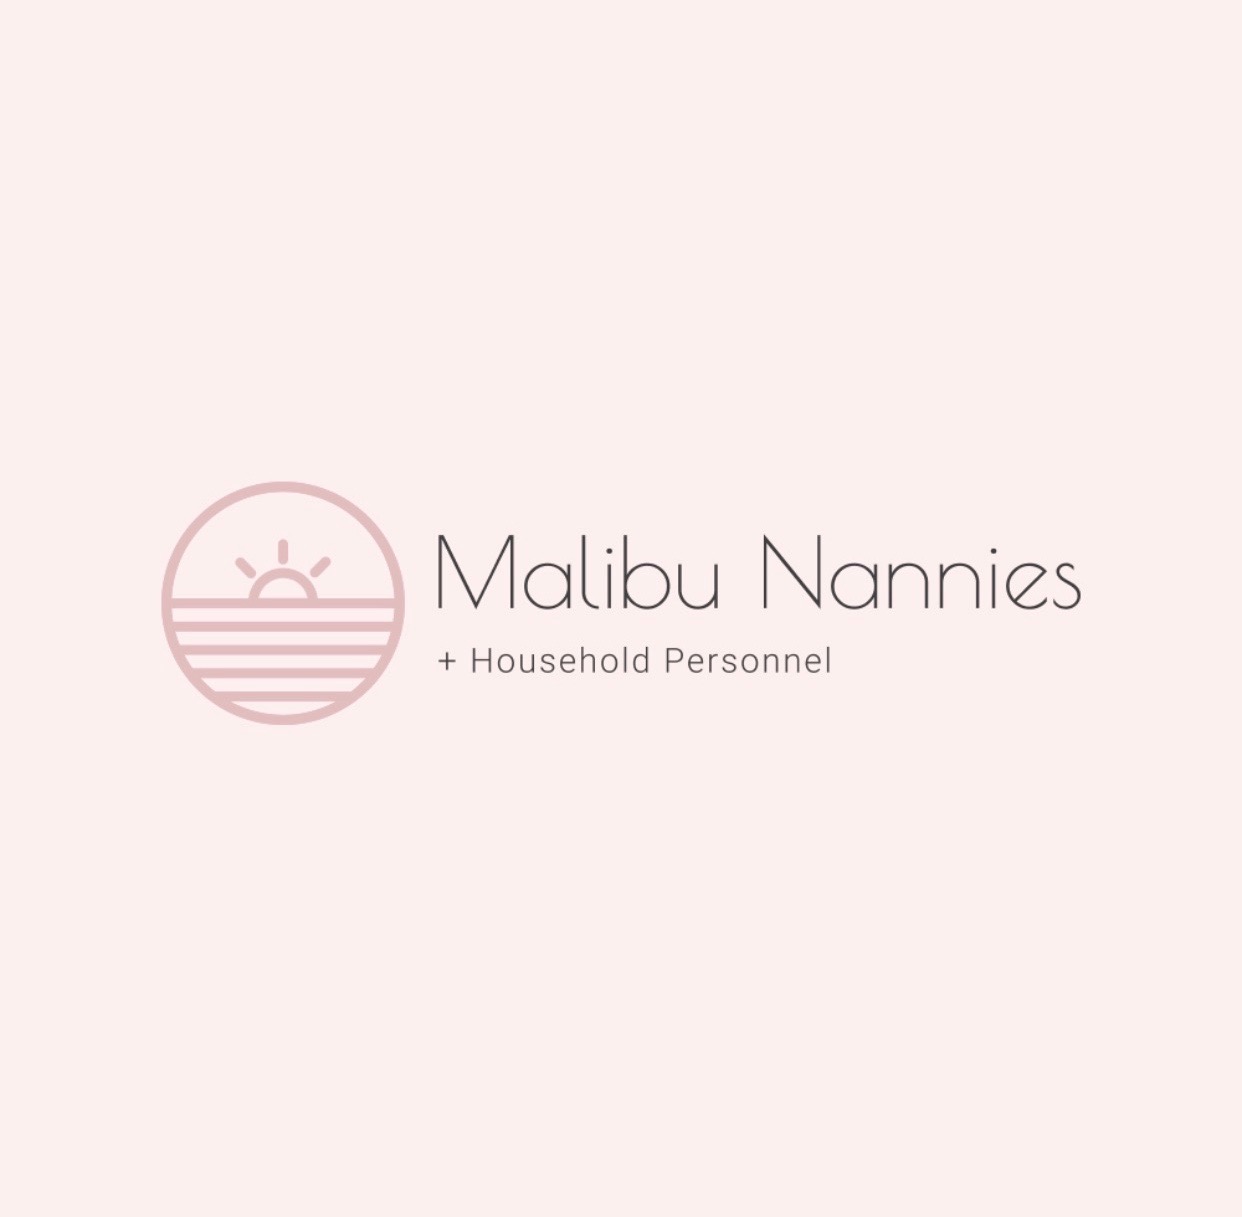 Malibu Nannies